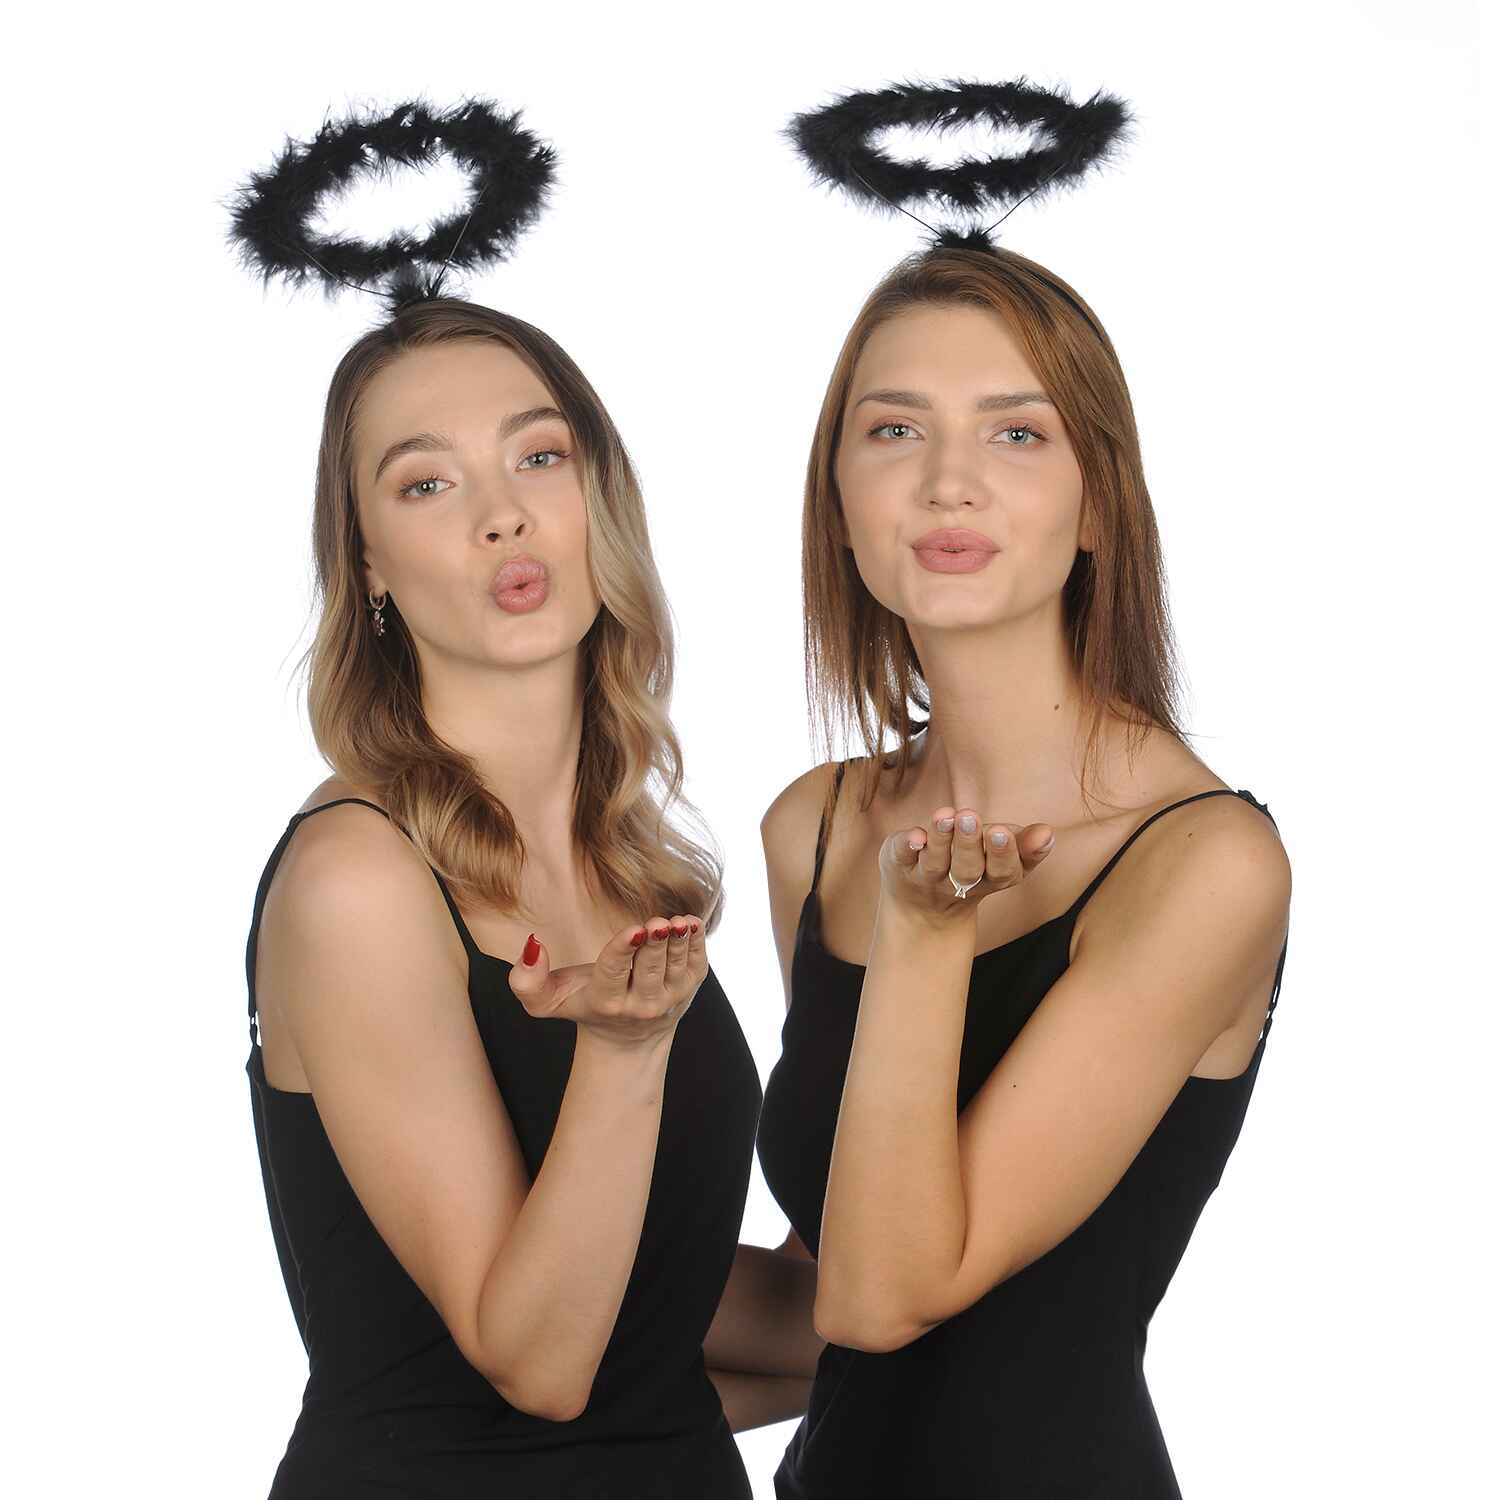  Dark Angel Halo Halloween costume accessories for women